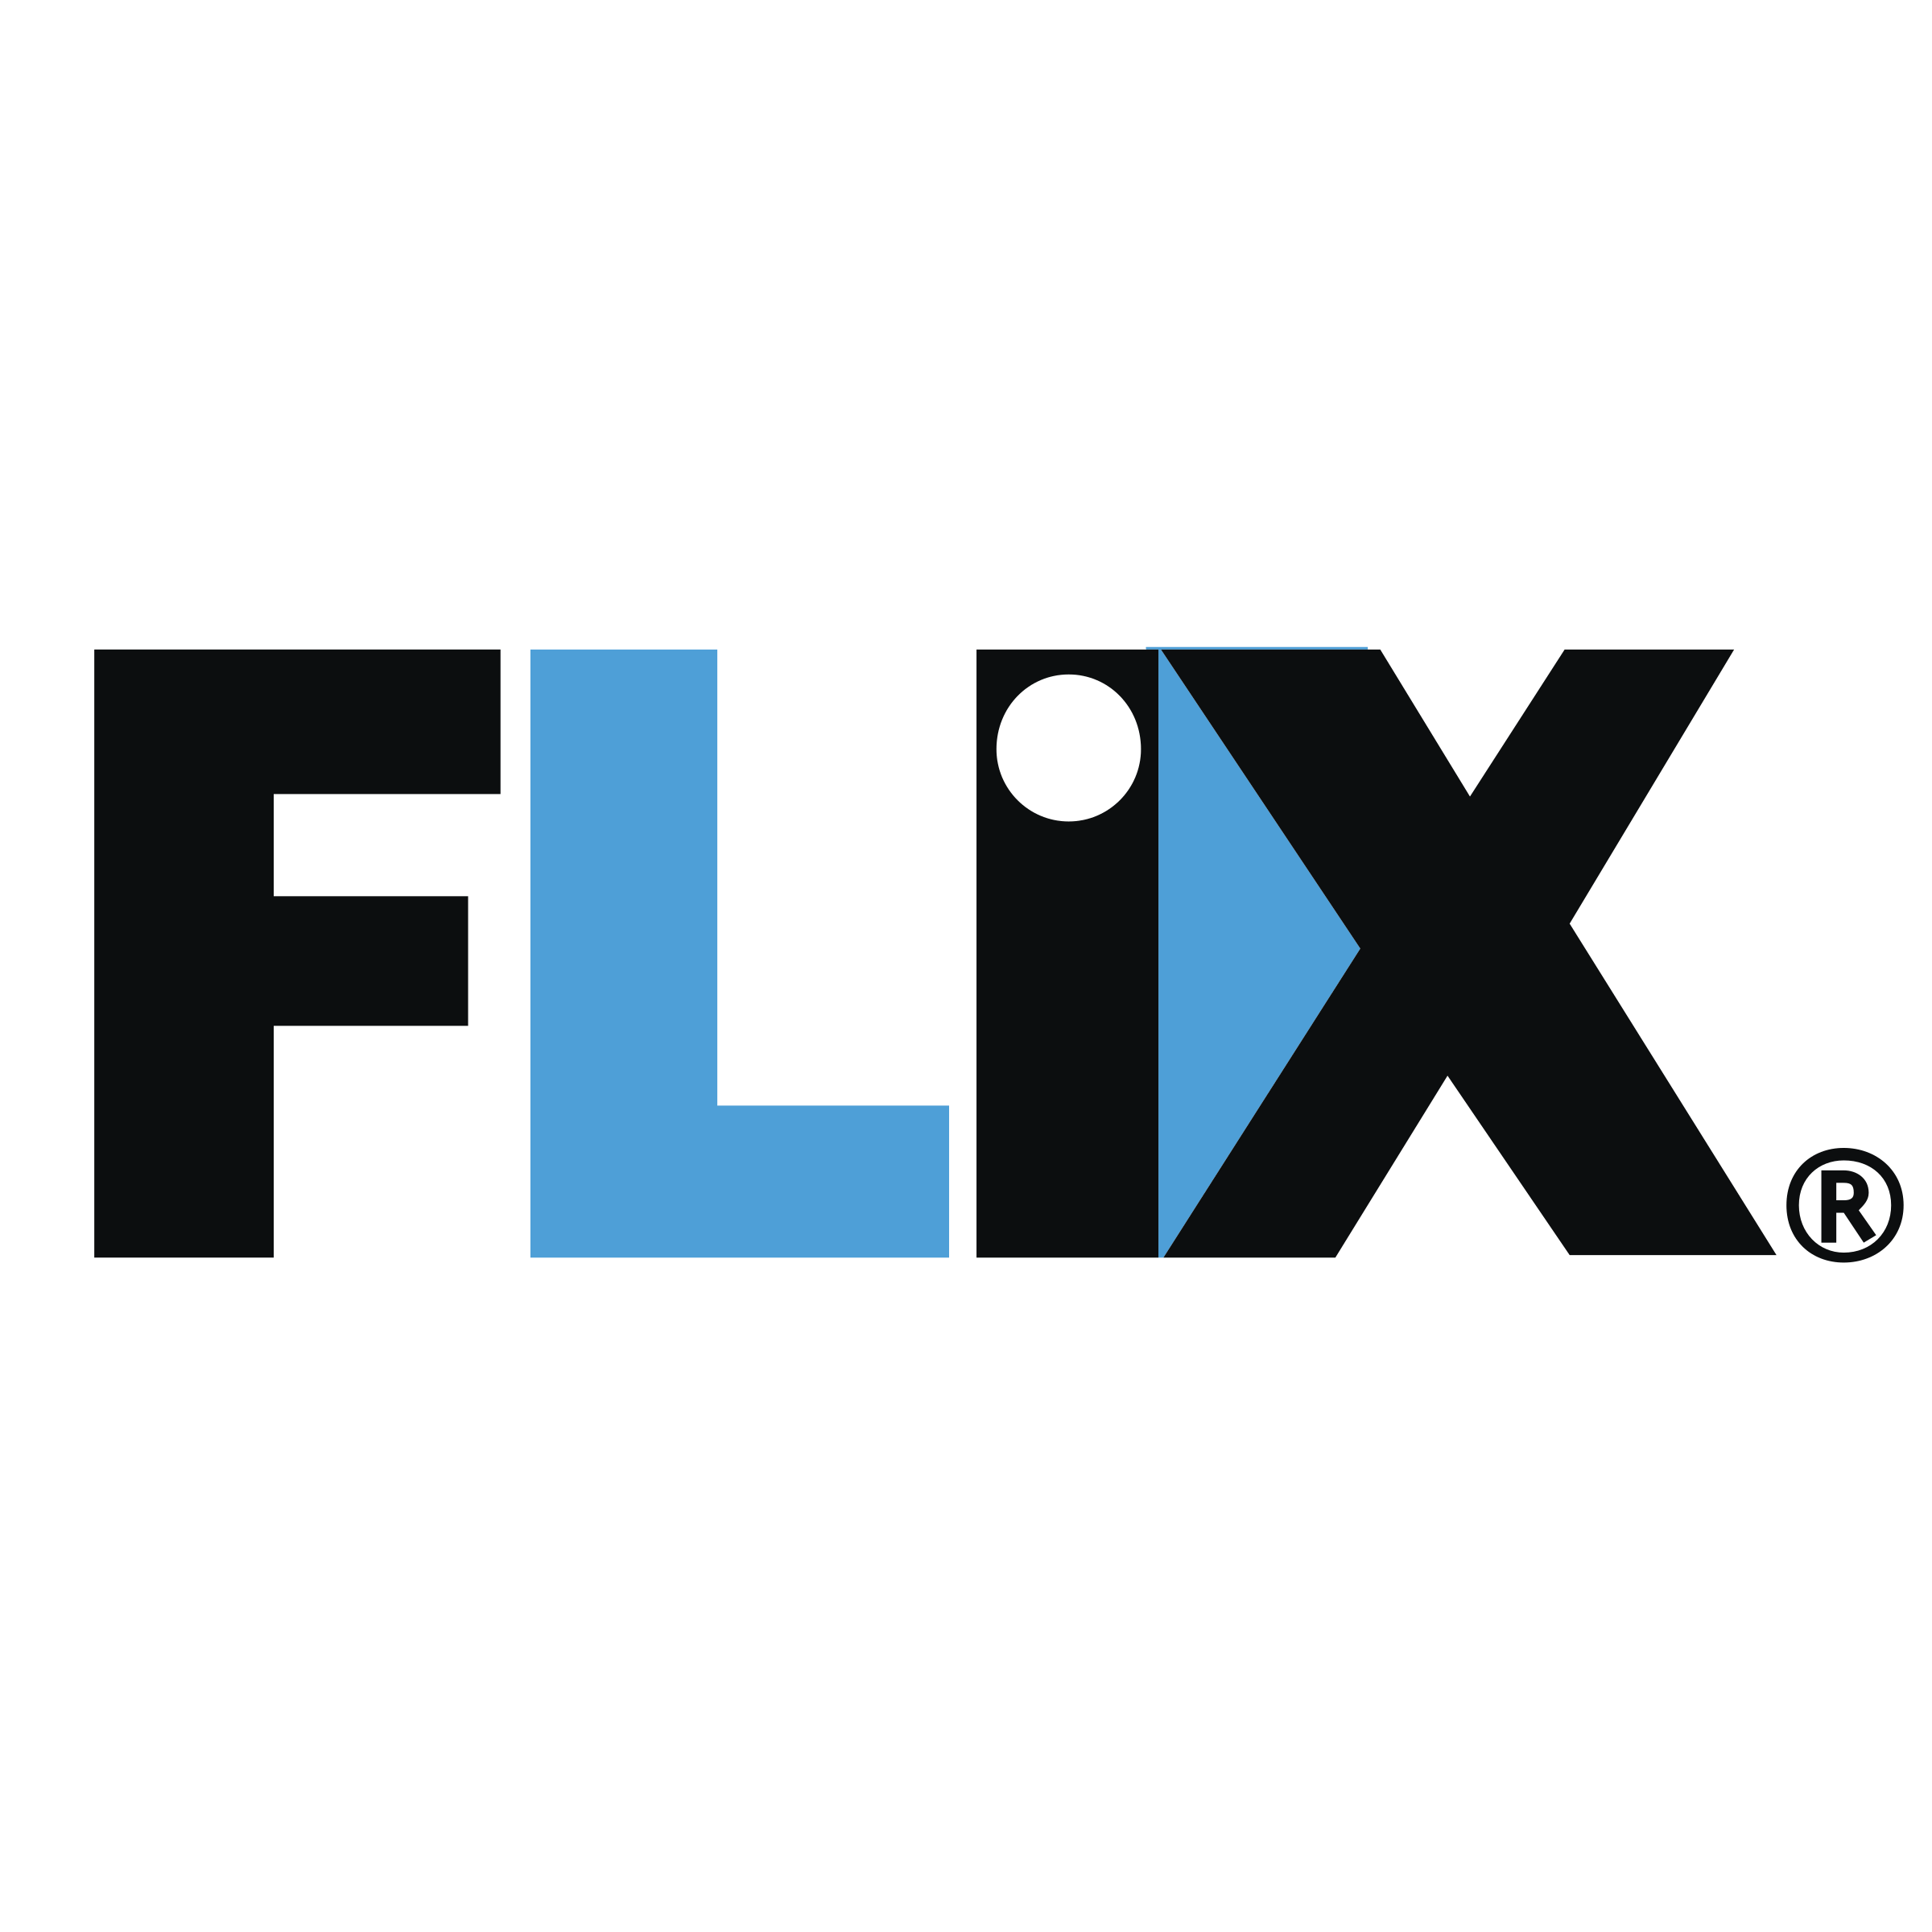 Flix Logo - Flix Logo PNG Transparent & SVG Vector - Freebie Supply